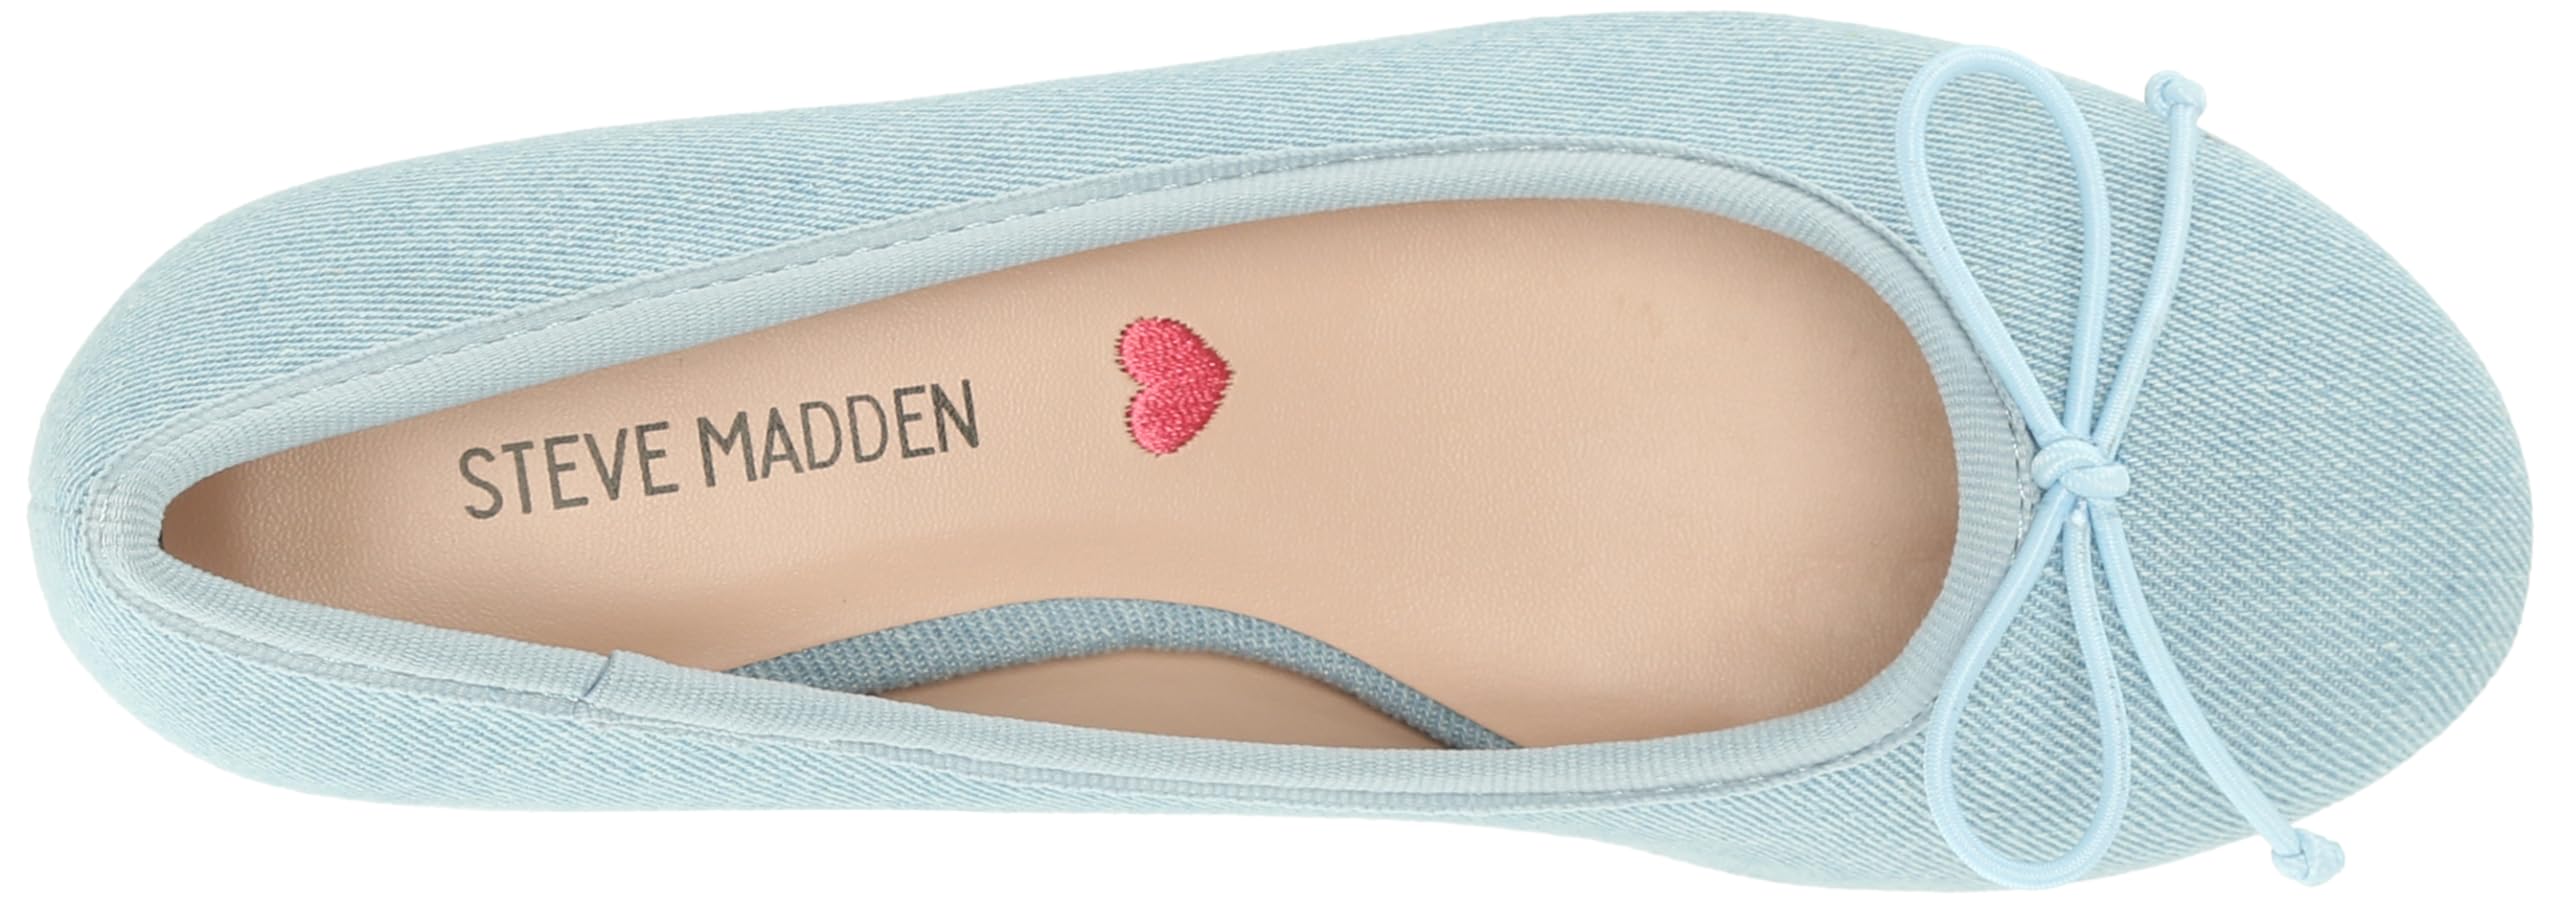 Steve Madden Girls Shoes Cherish Ballet Flat